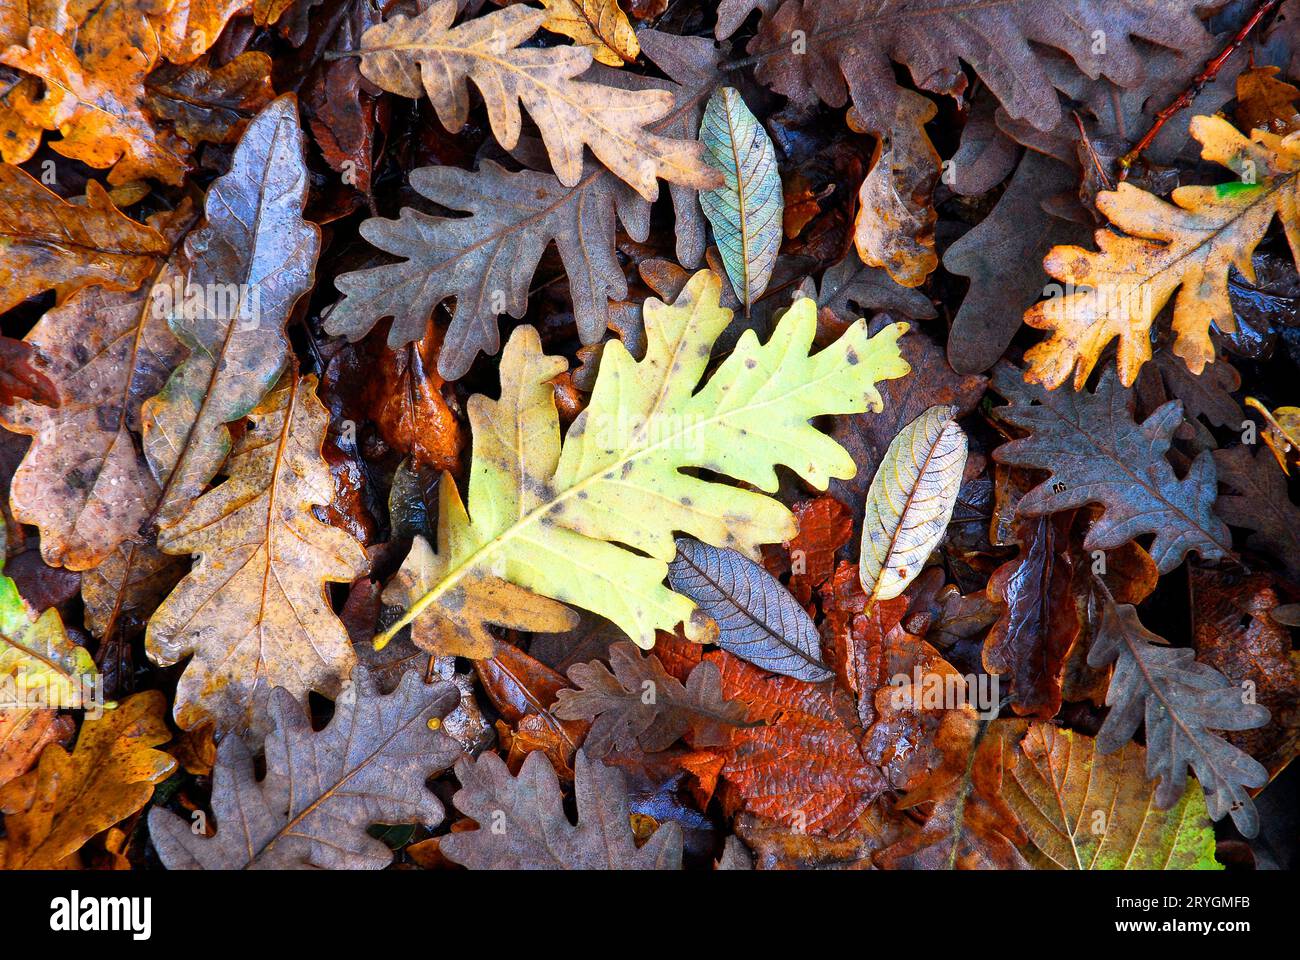 Pyrenean oak (Quercus pyrenaica) and willow (Salix atrocinerea) leaves fallen on the ground. Stock Photo